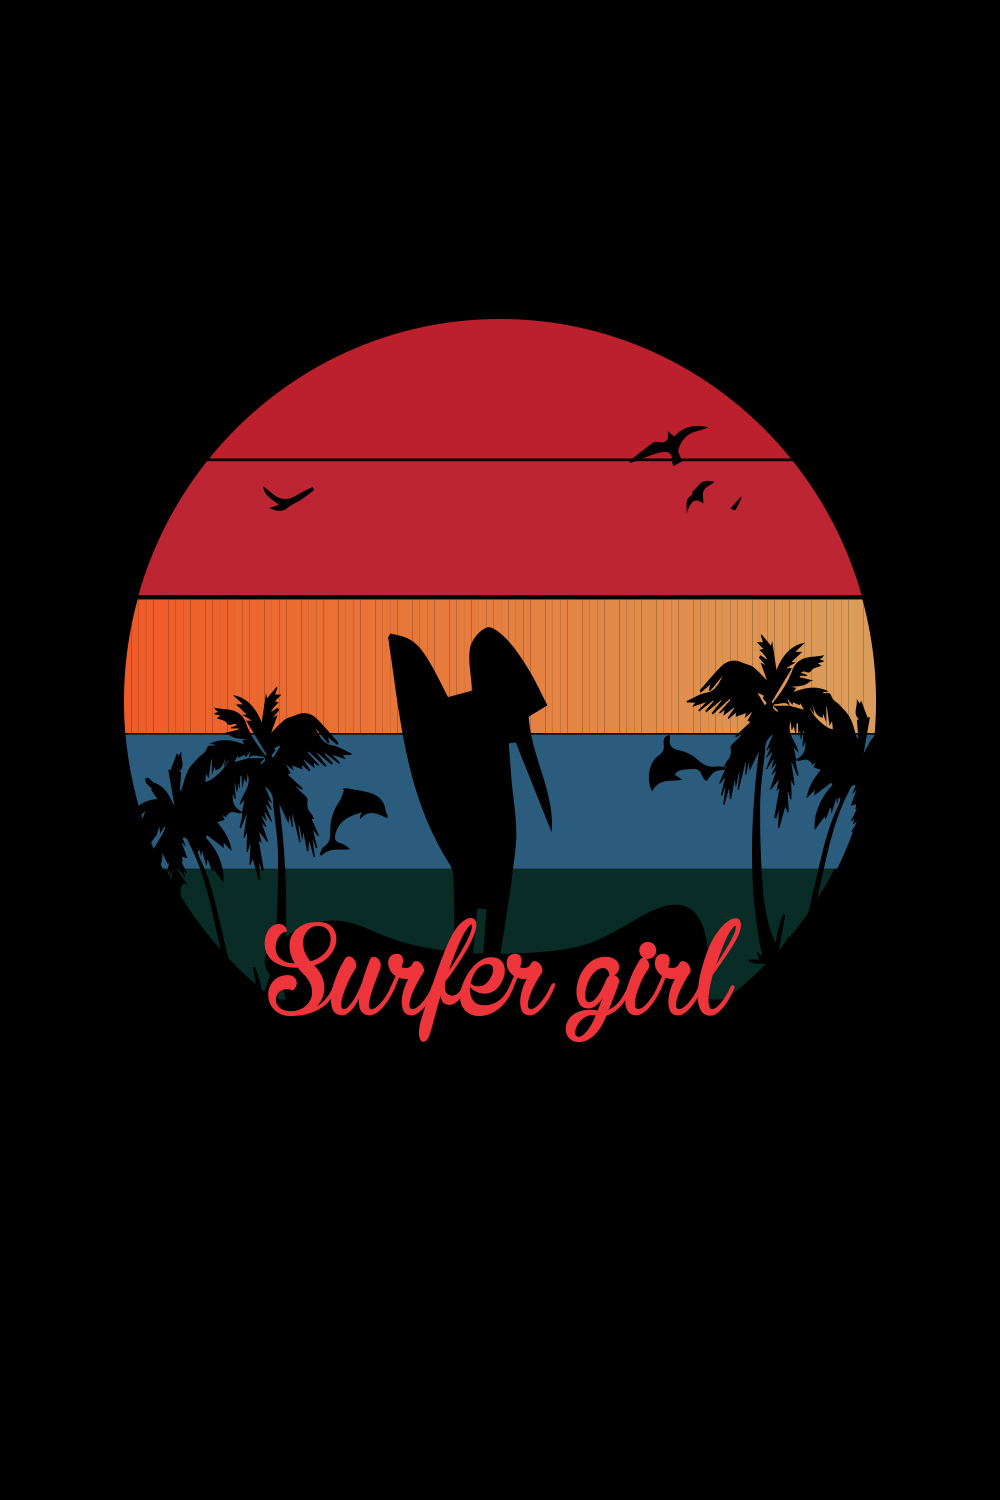 Surfer girl pinterest preview image.